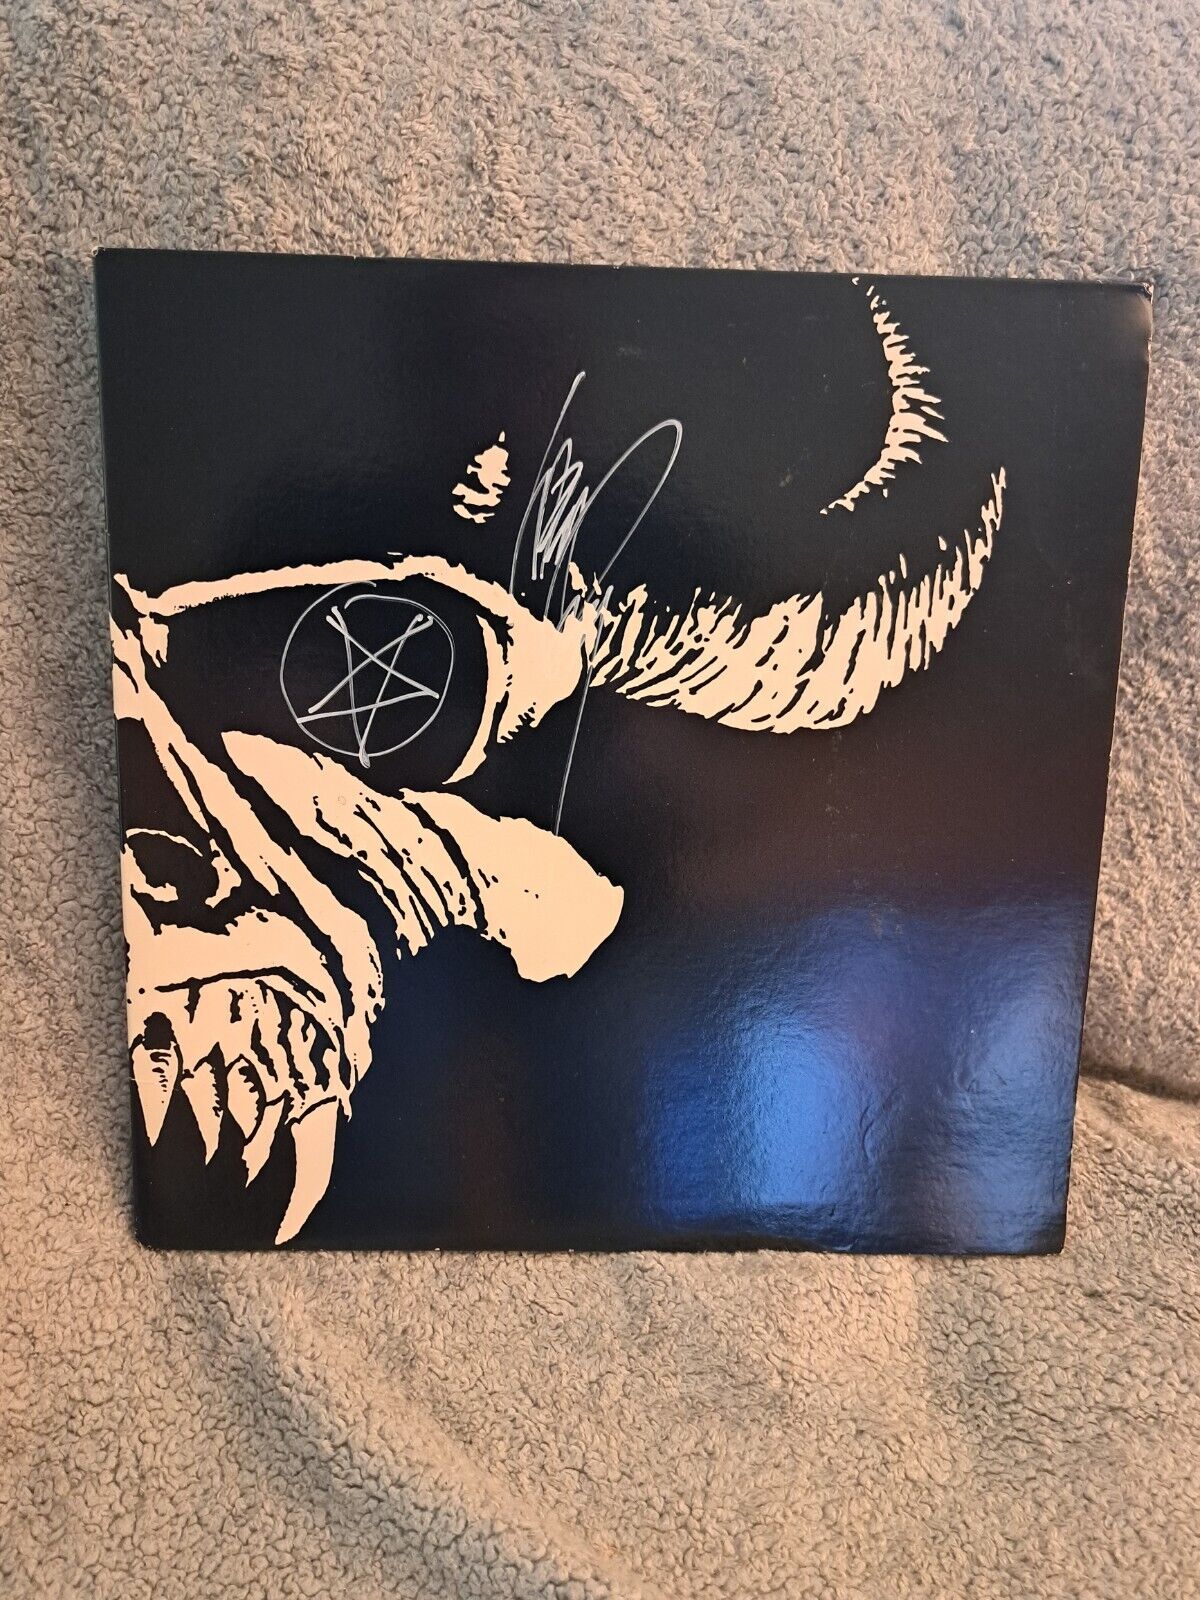 Danzig 1 Autographed Vinyl Original 1988 Pressing